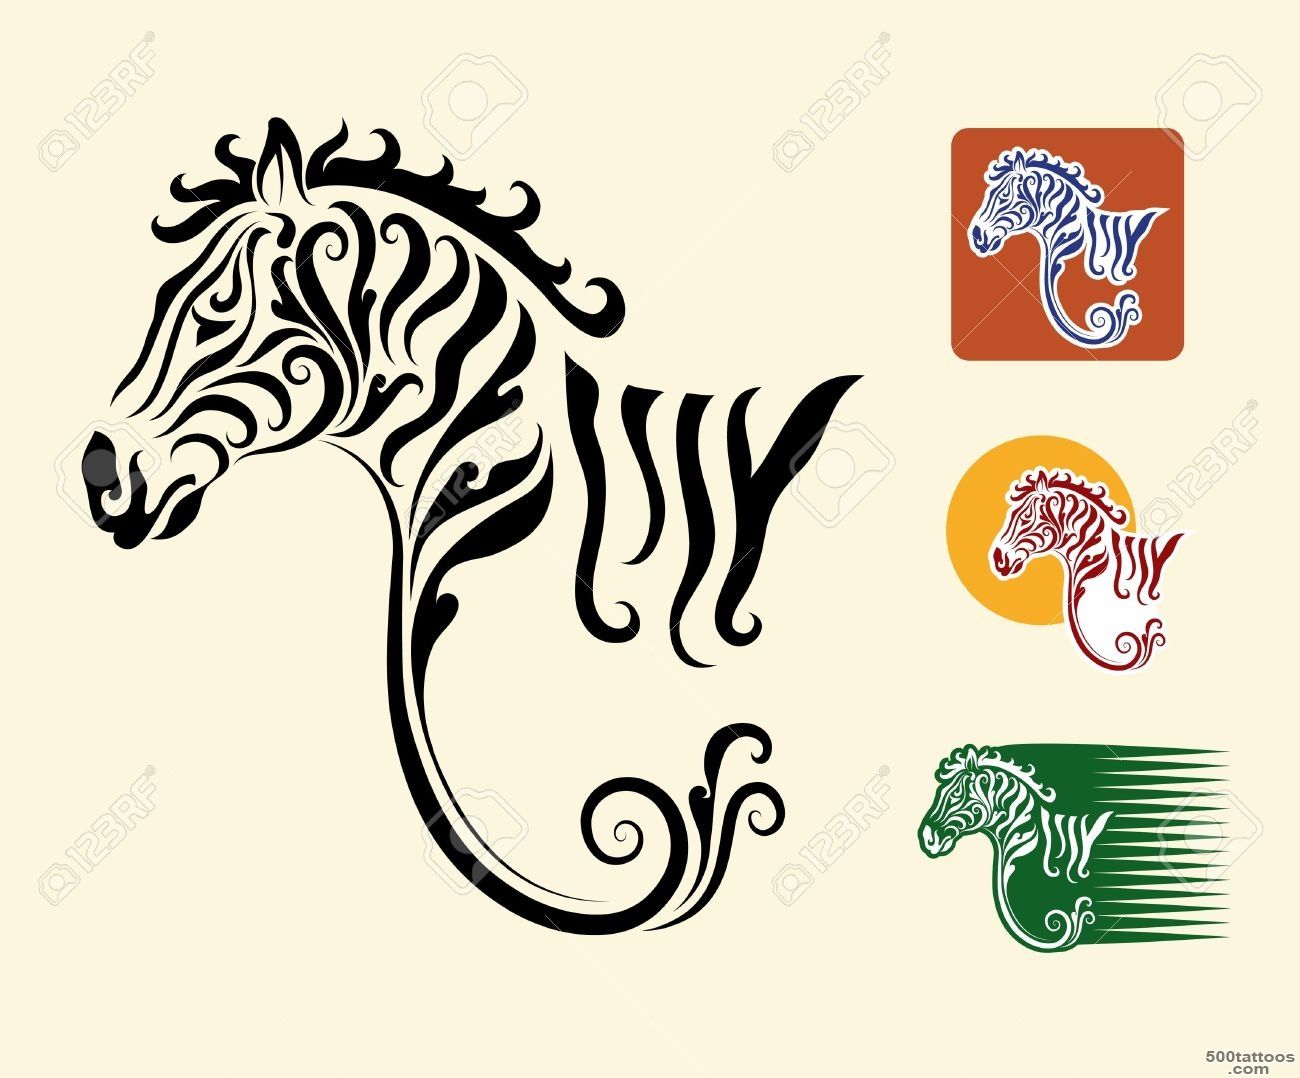 Zebra Symbol And Three Alternative Colors Design Royalty Free ..._49